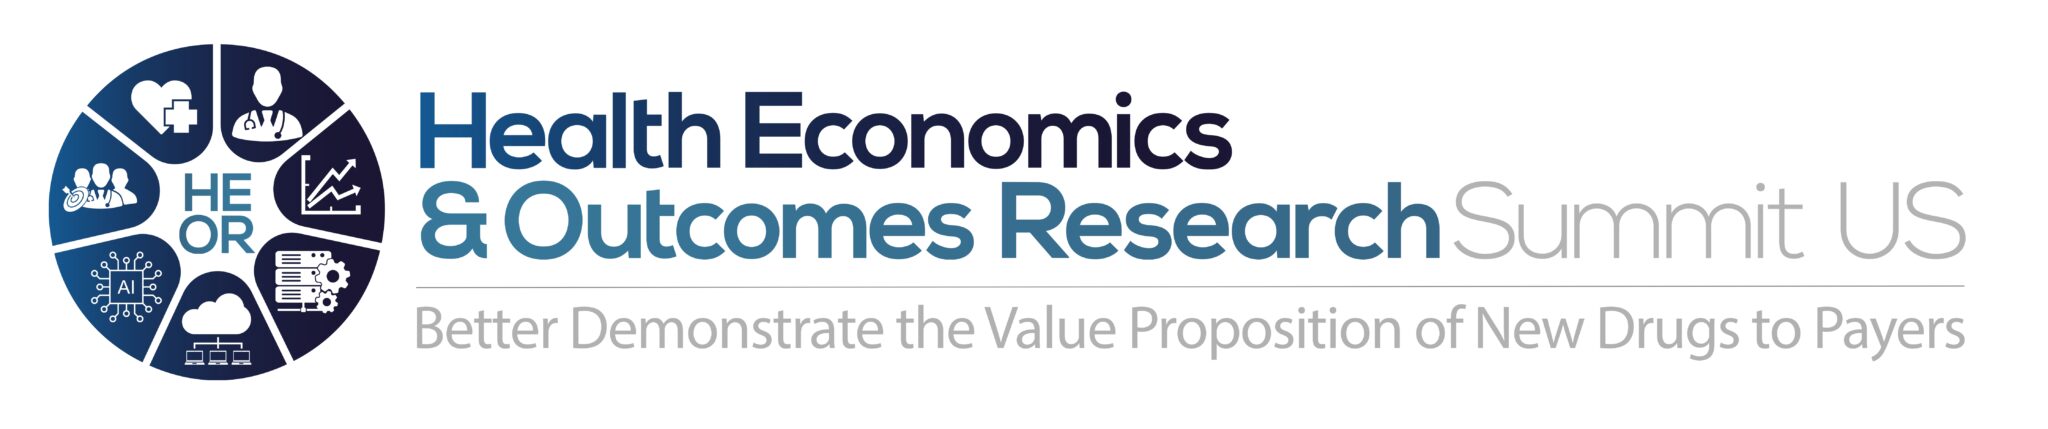 HW230629-33264-Heath-Economics-Outcomes-Research-Summit-US-logo-FINAL-2_page-0001-2048x429